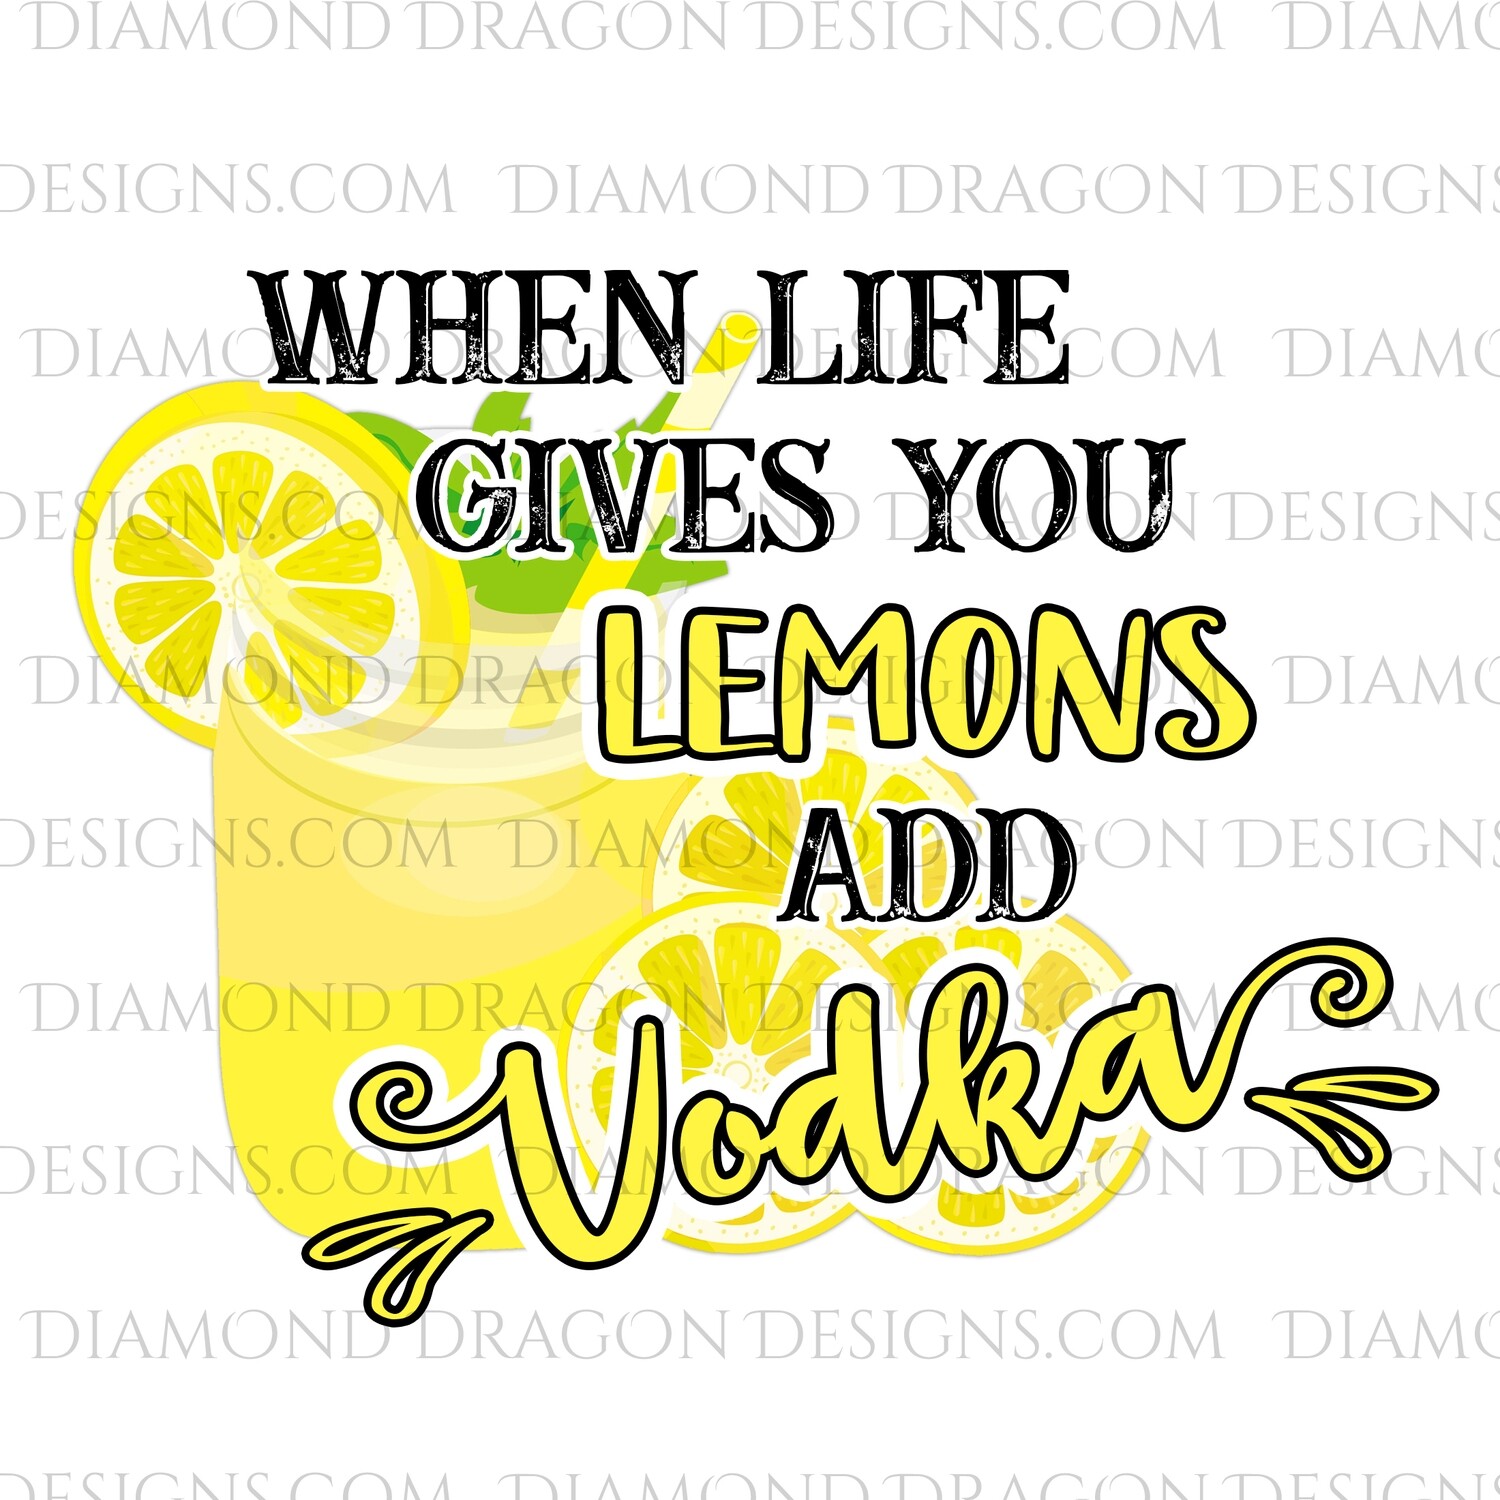 Alcohol - If Life Gives You Lemons Add Vodka, Digital Image